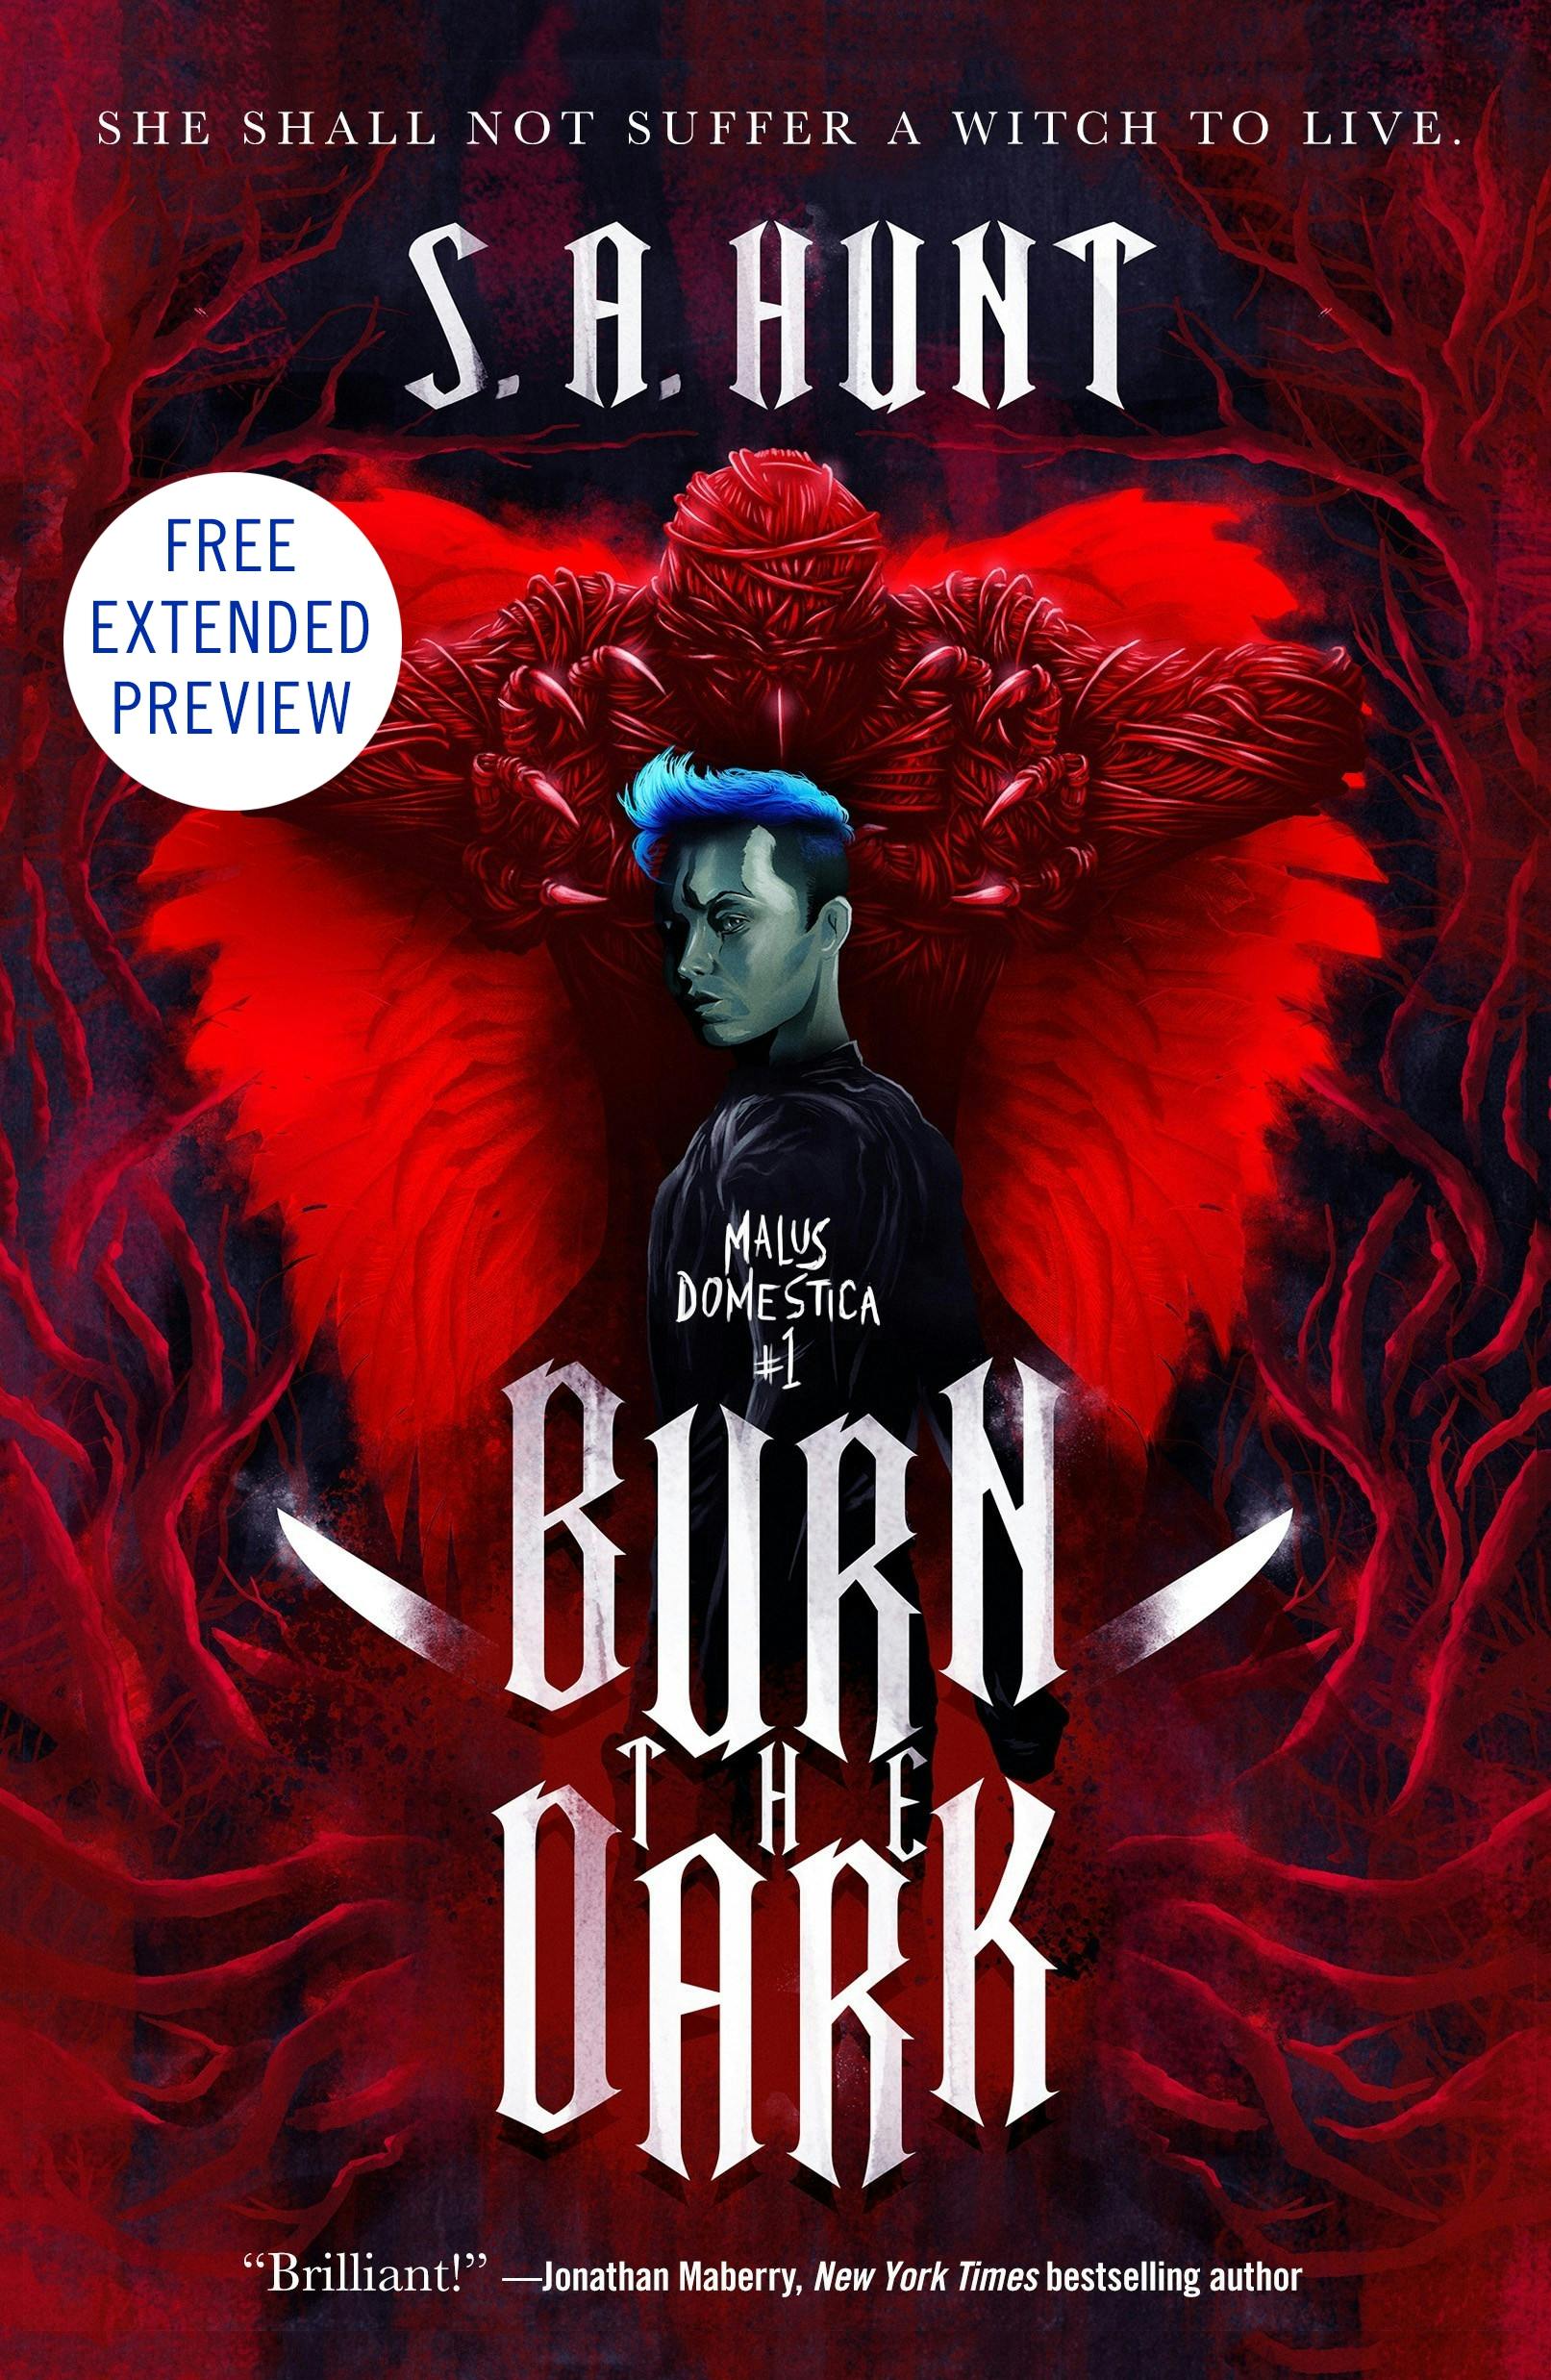 Cover for the book titled as: Burn the Dark Sneak Peek